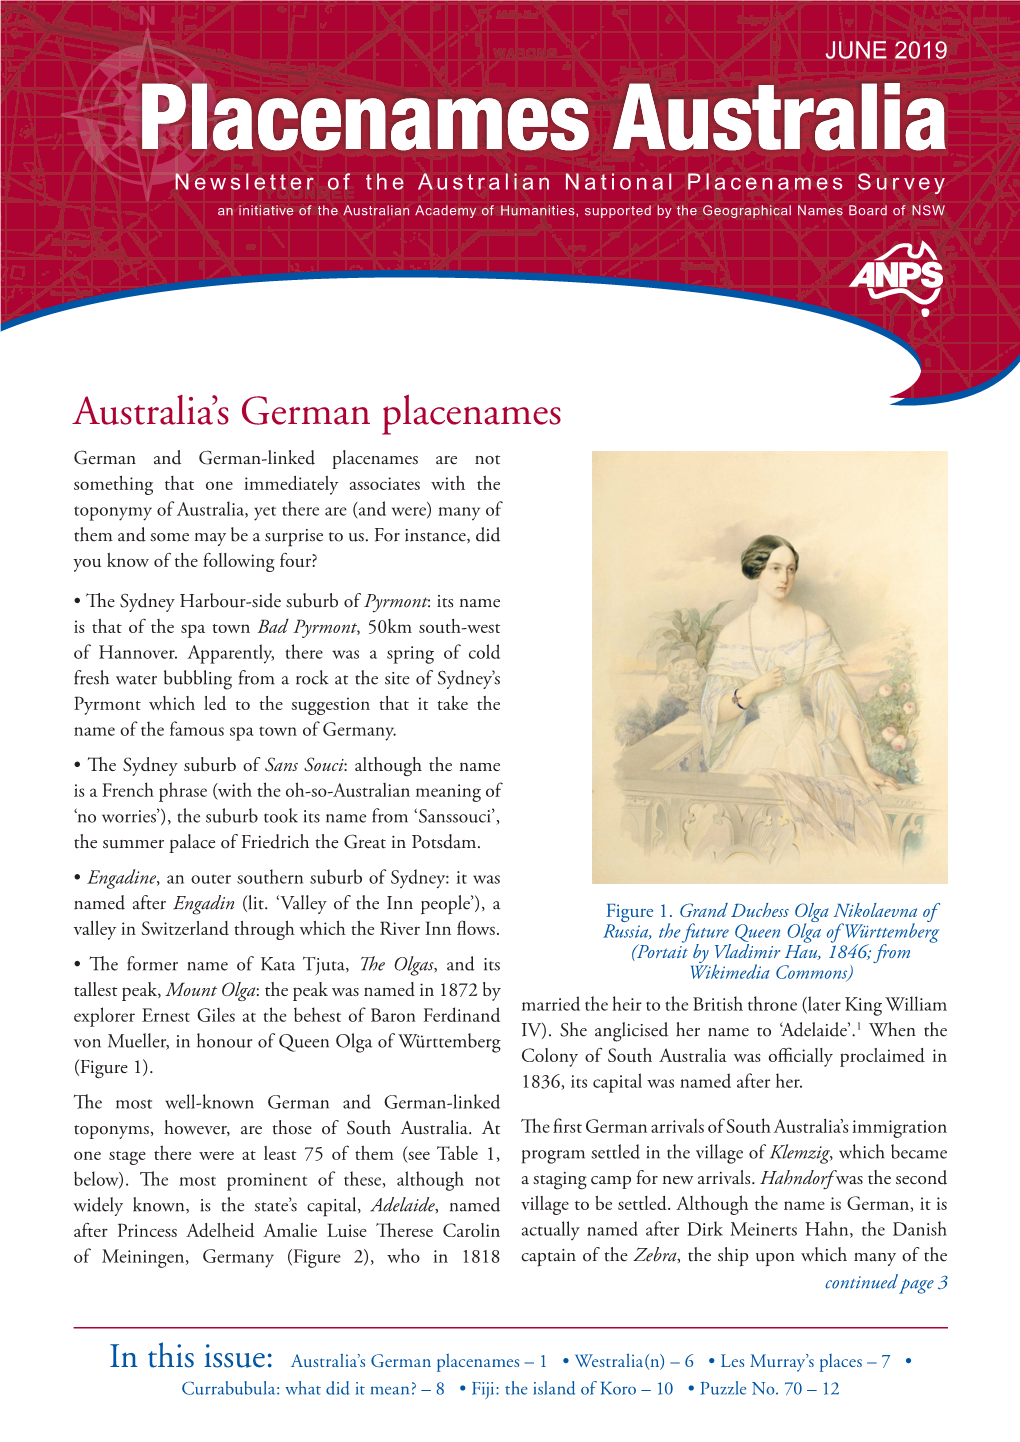 Australia's German Placenames